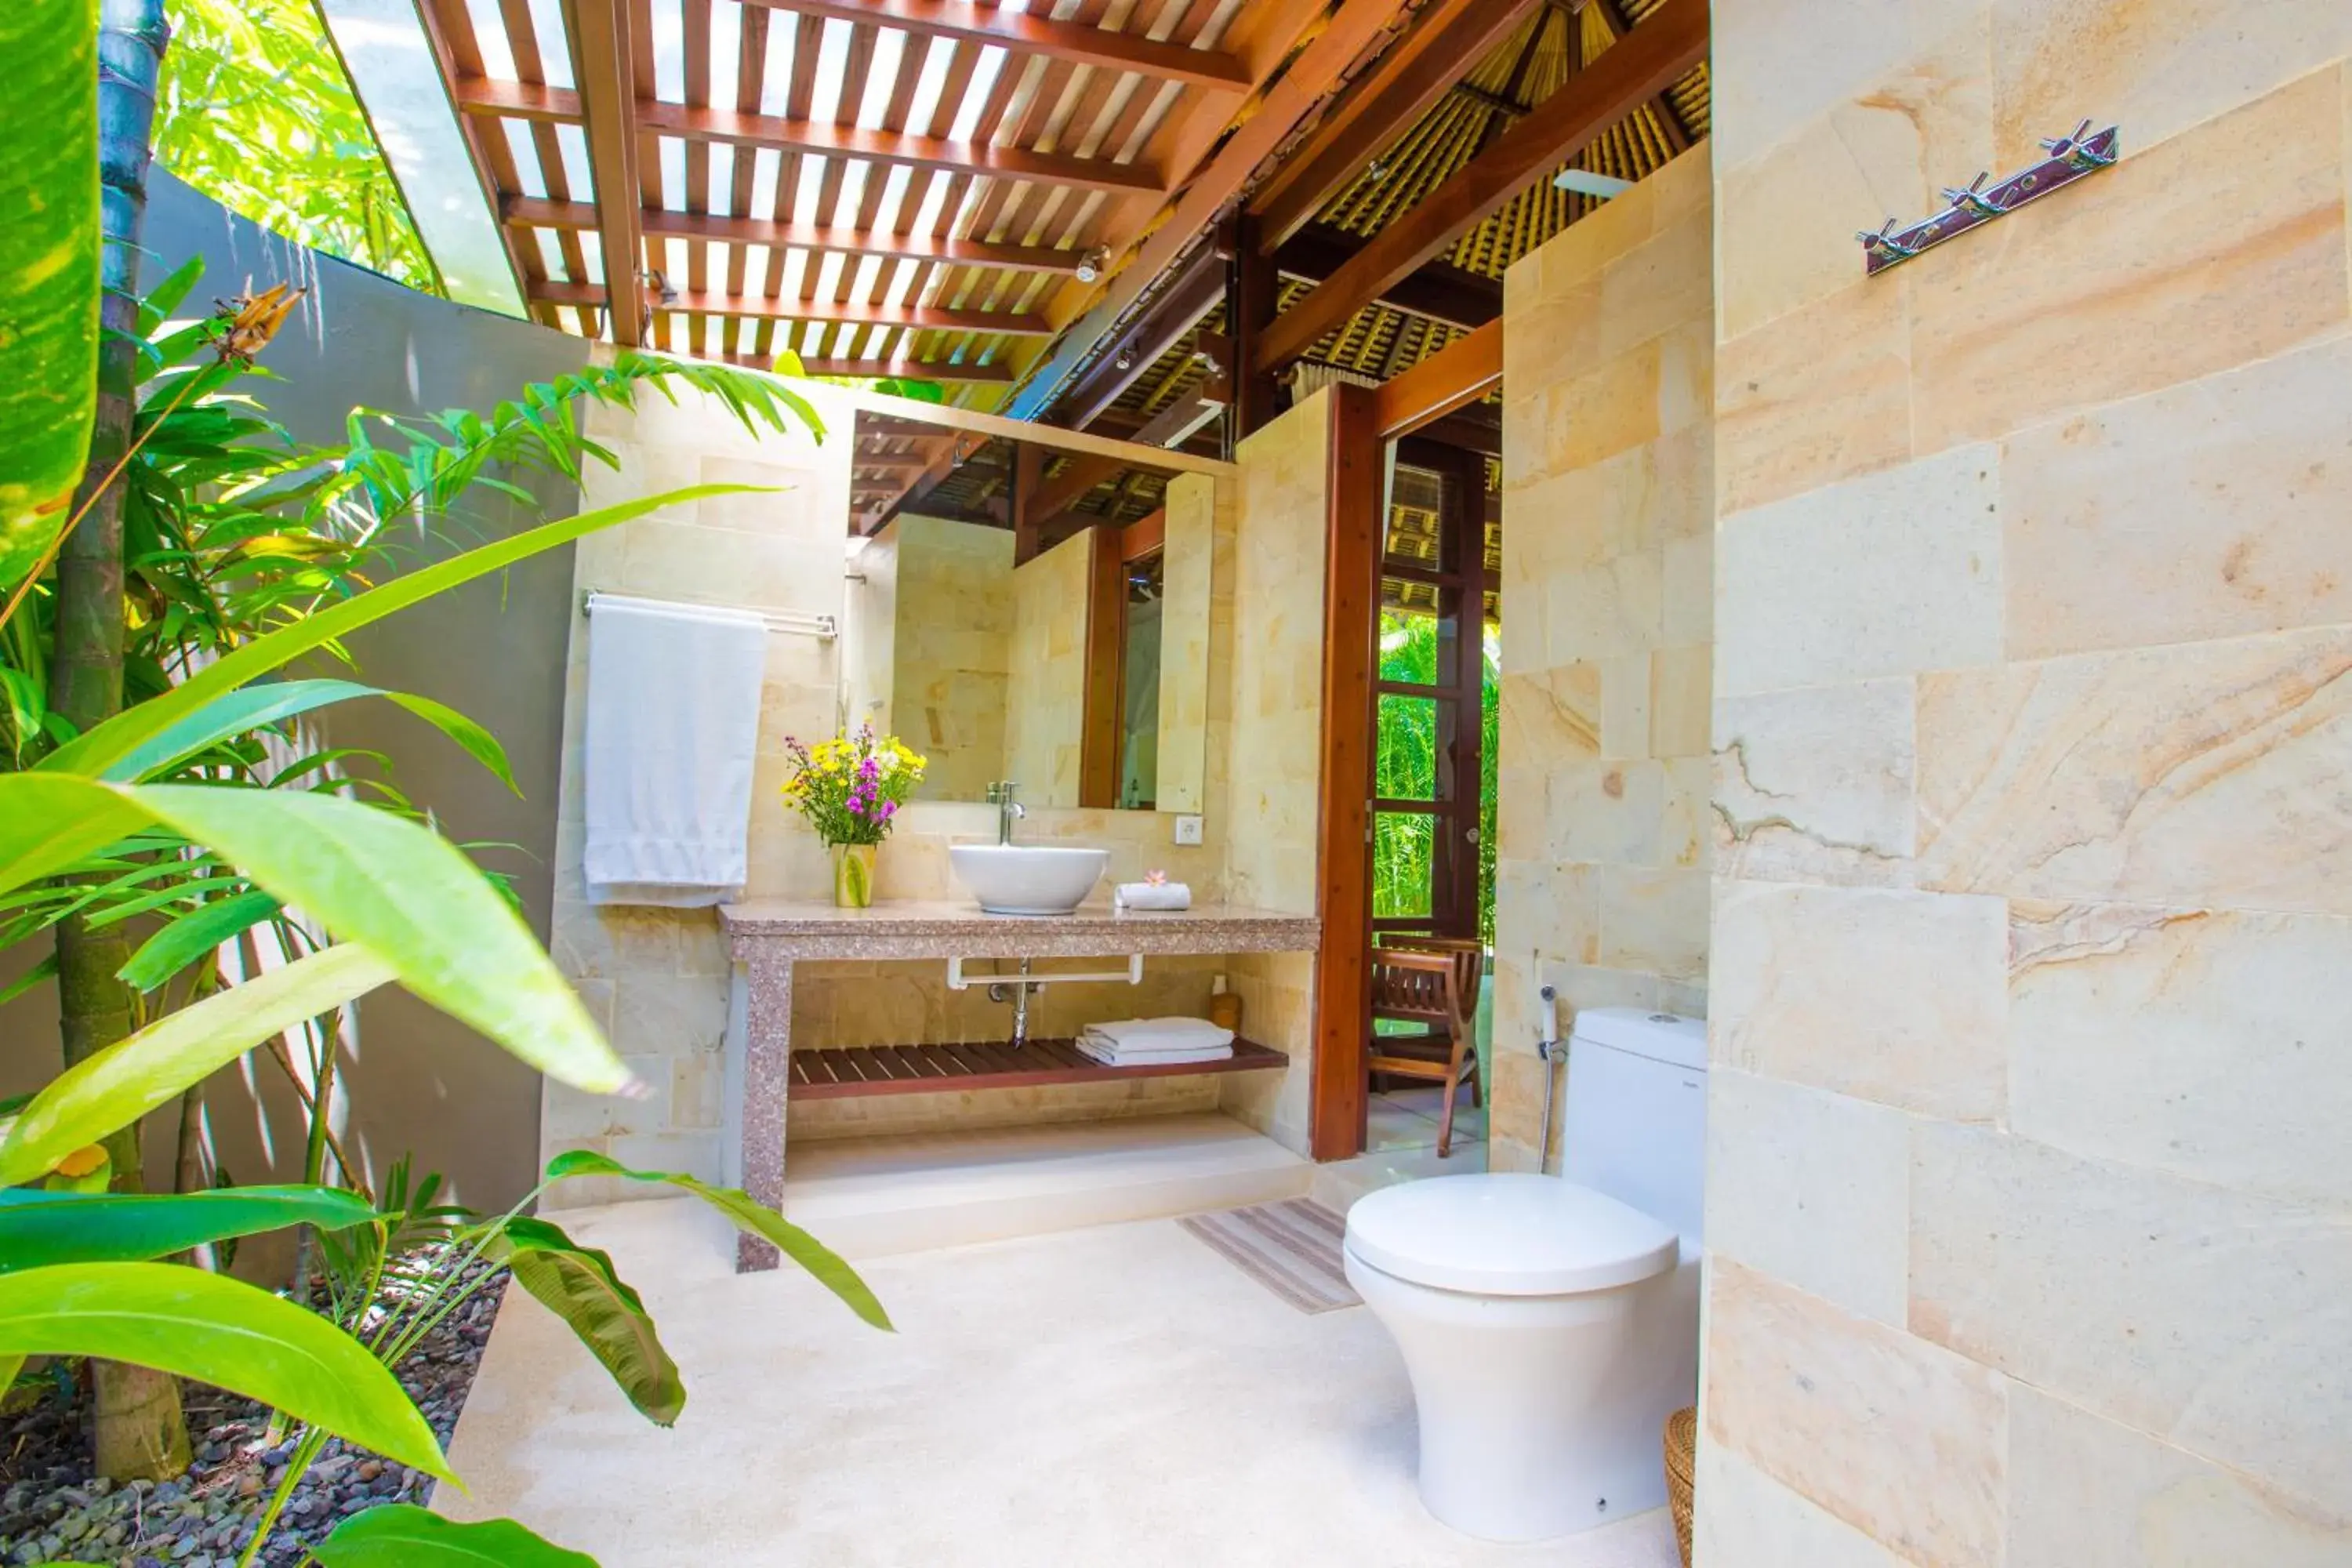 Toilet, Bathroom in Bali Harmony Villa